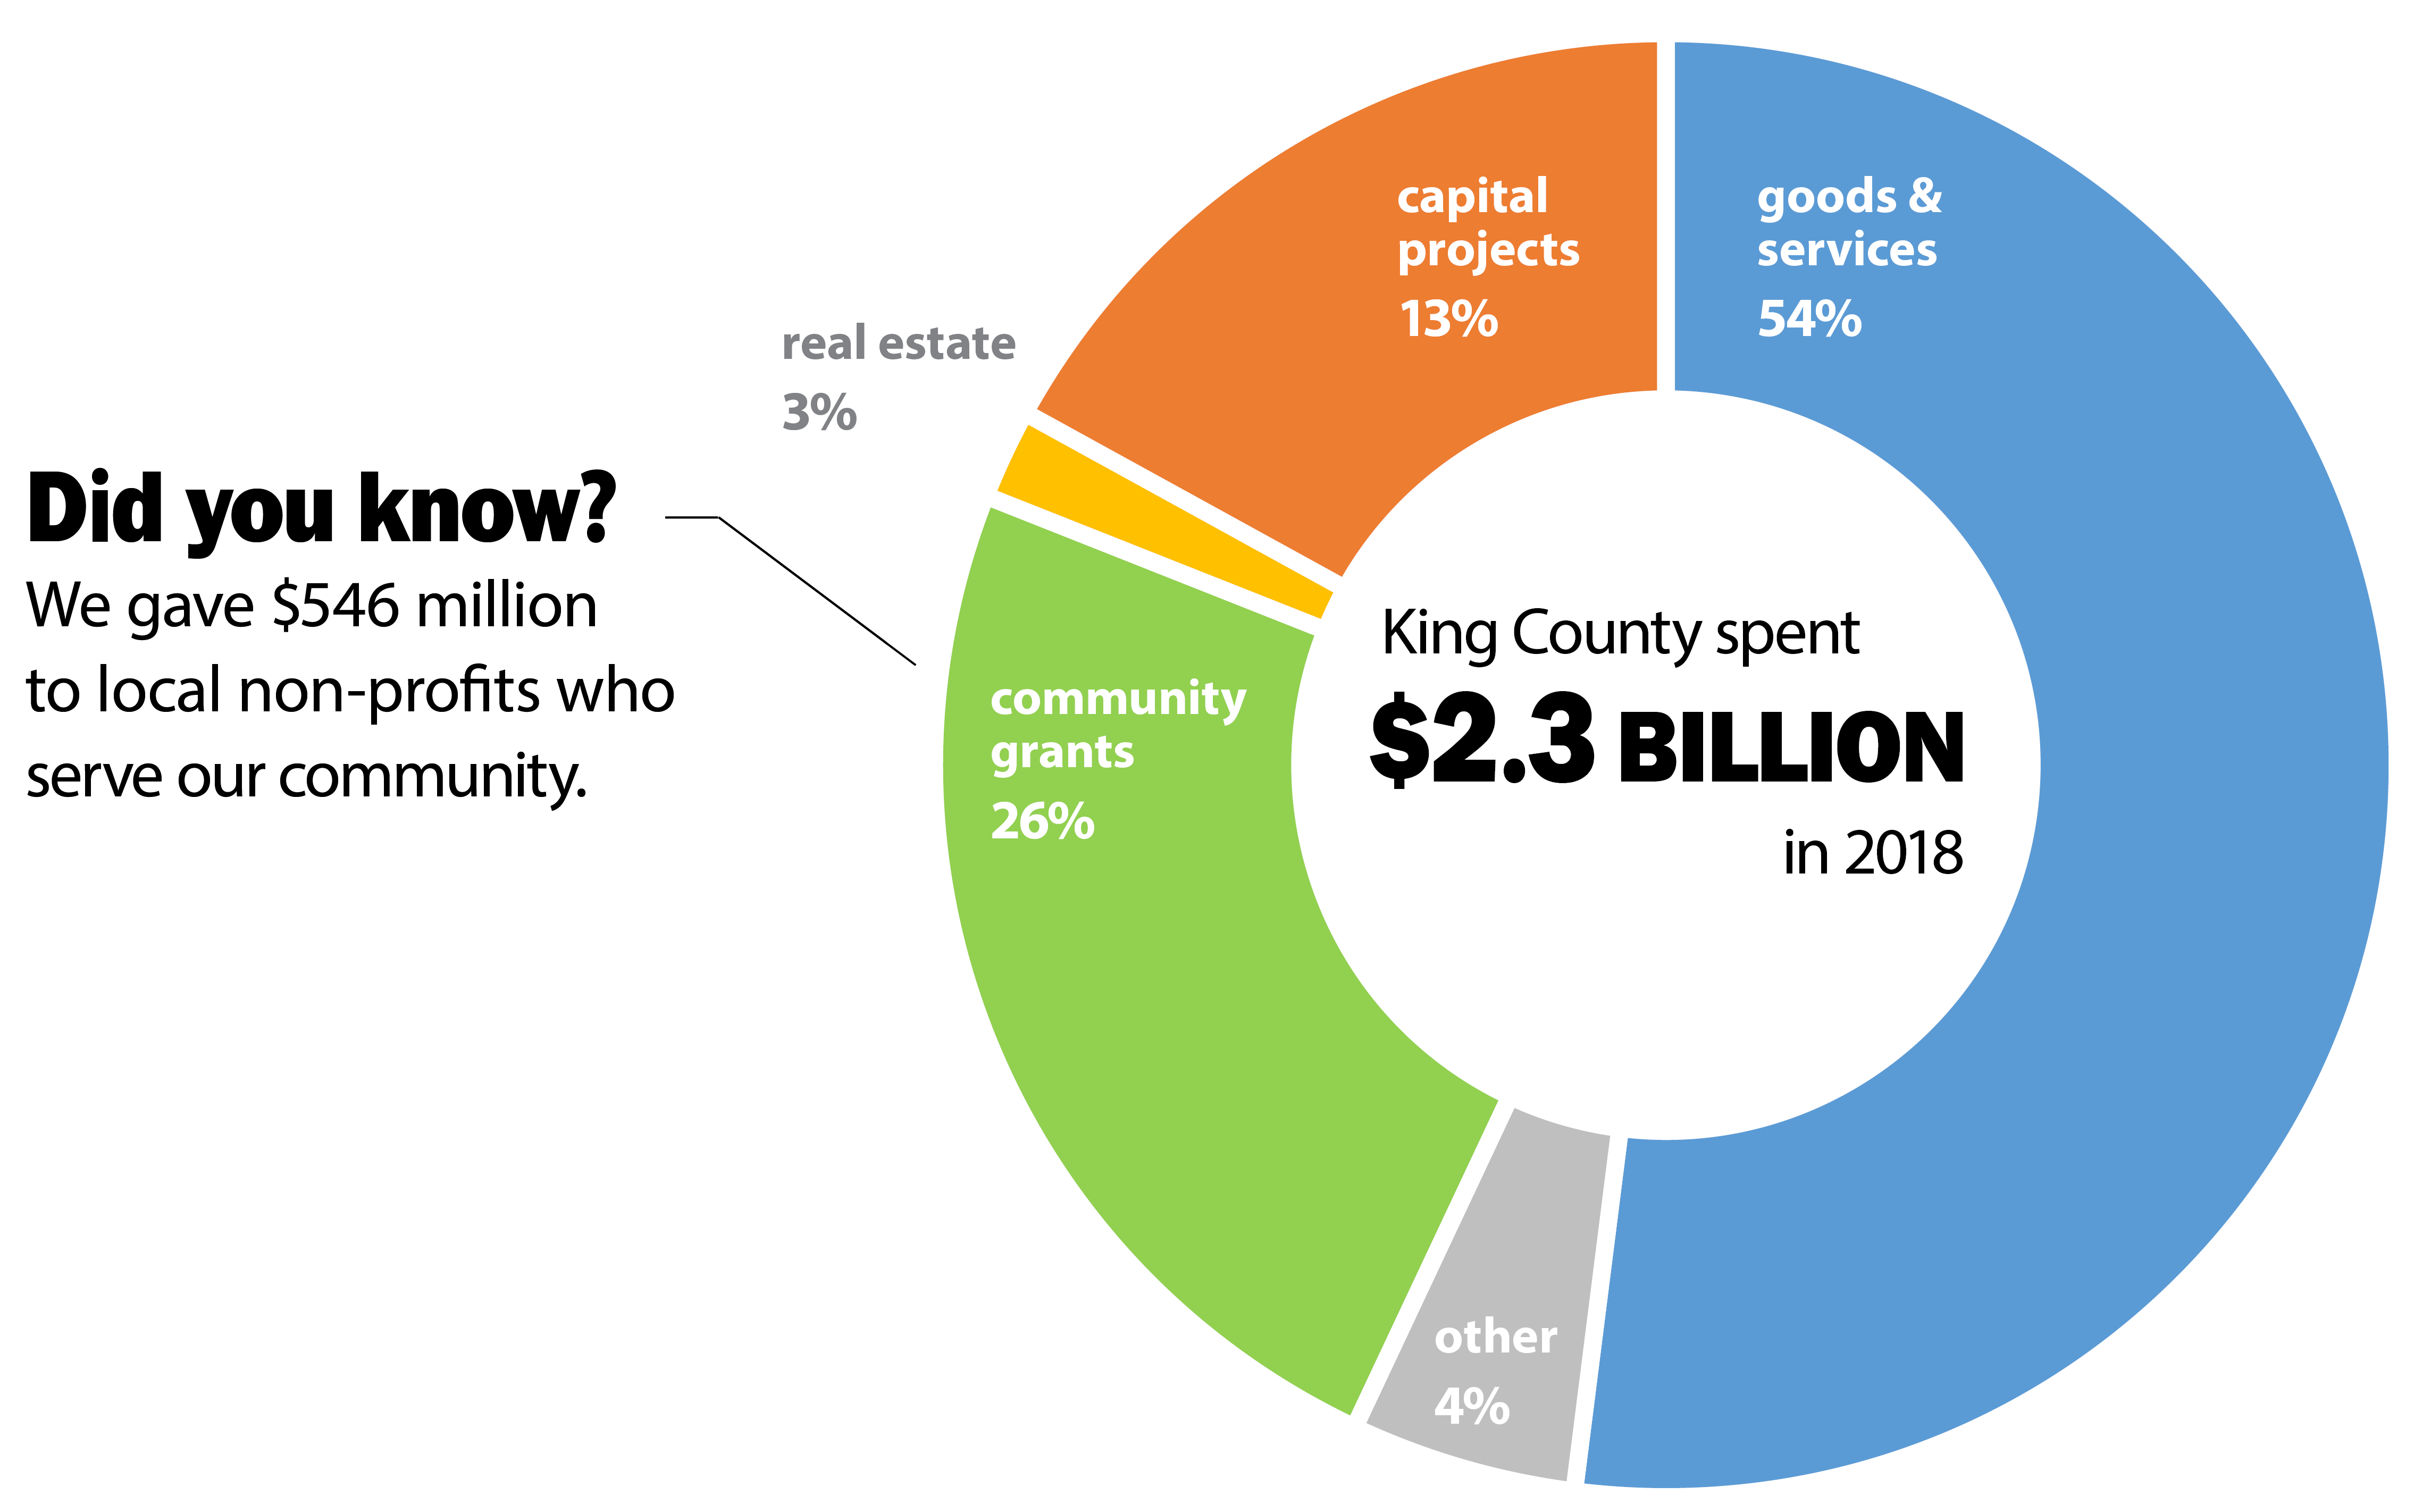 King County Metro Org Chart